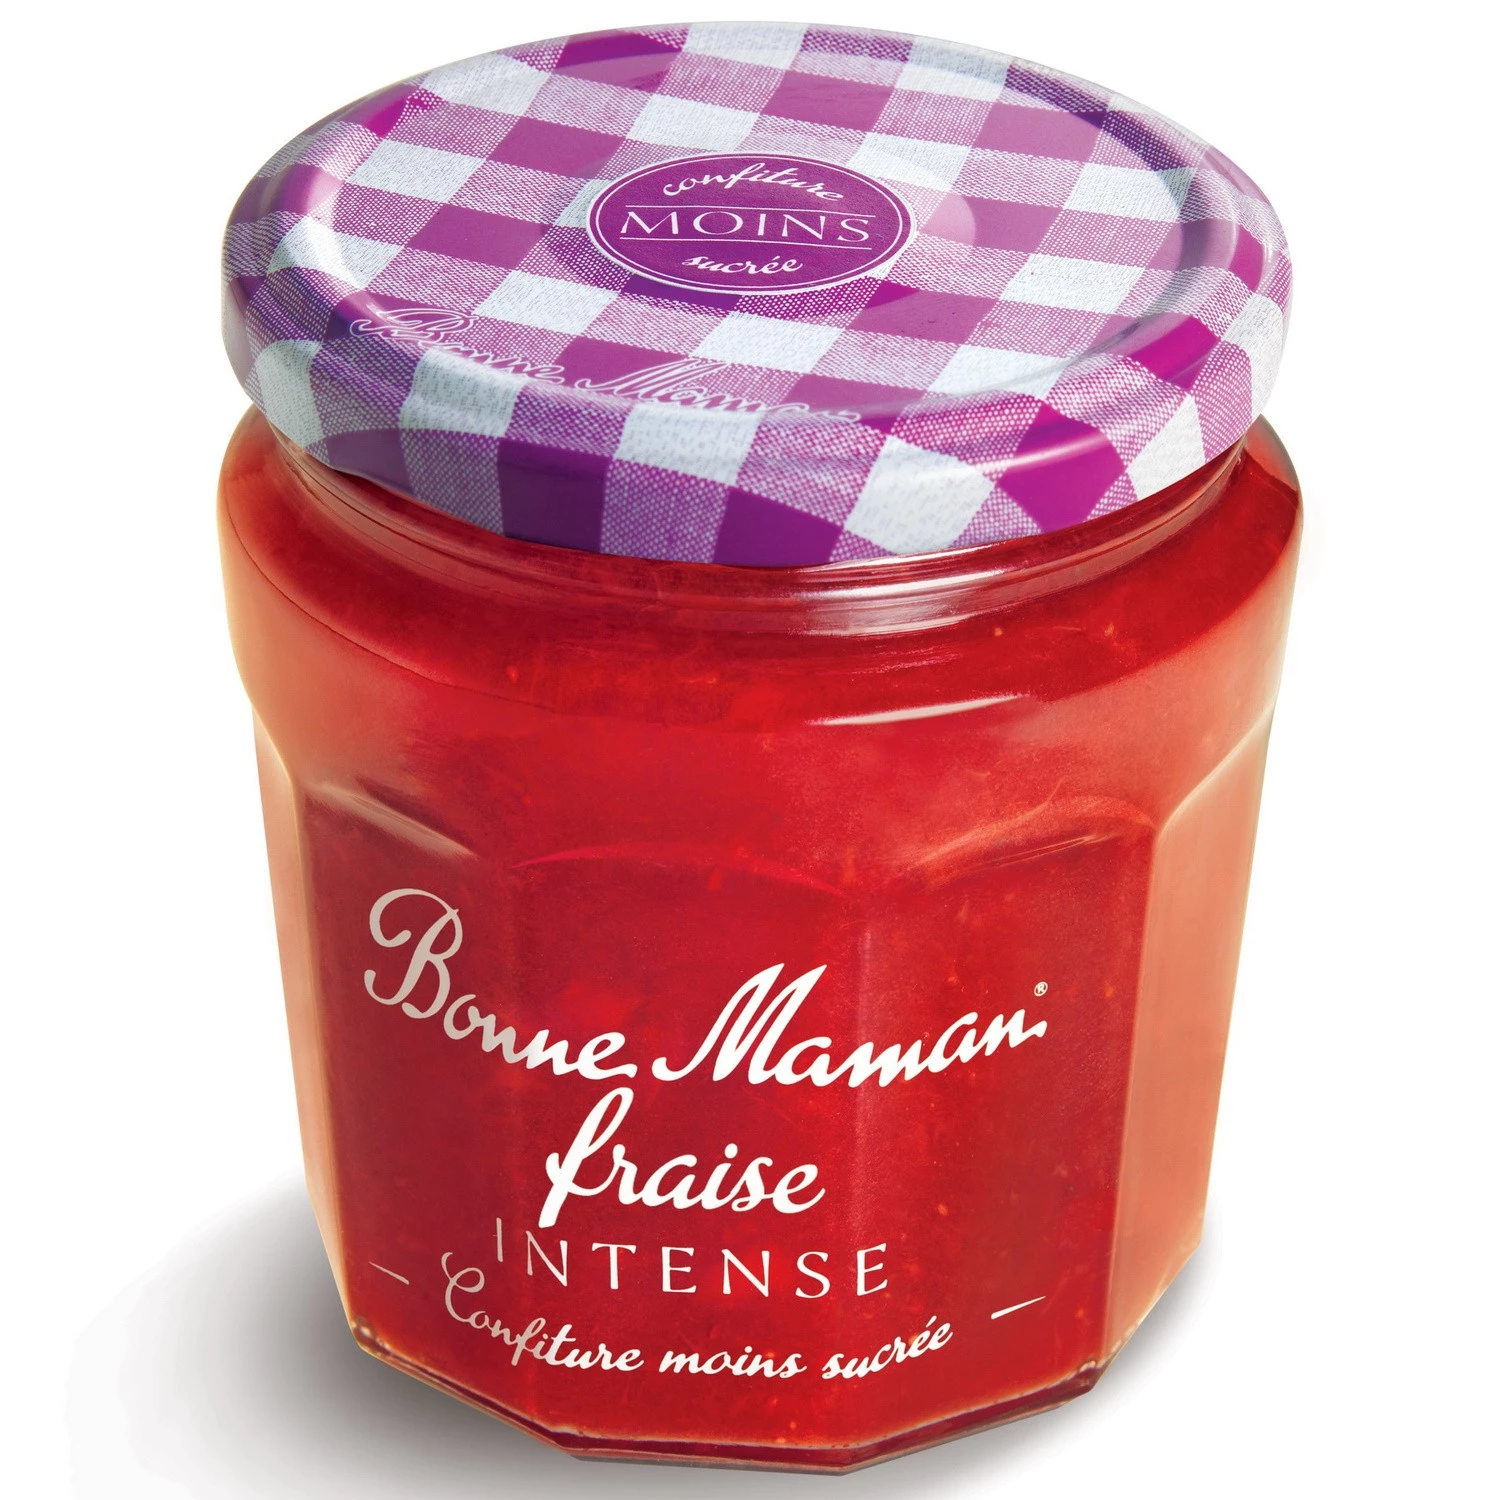 Intense strawberry jam 335g - BONNE MAMAN